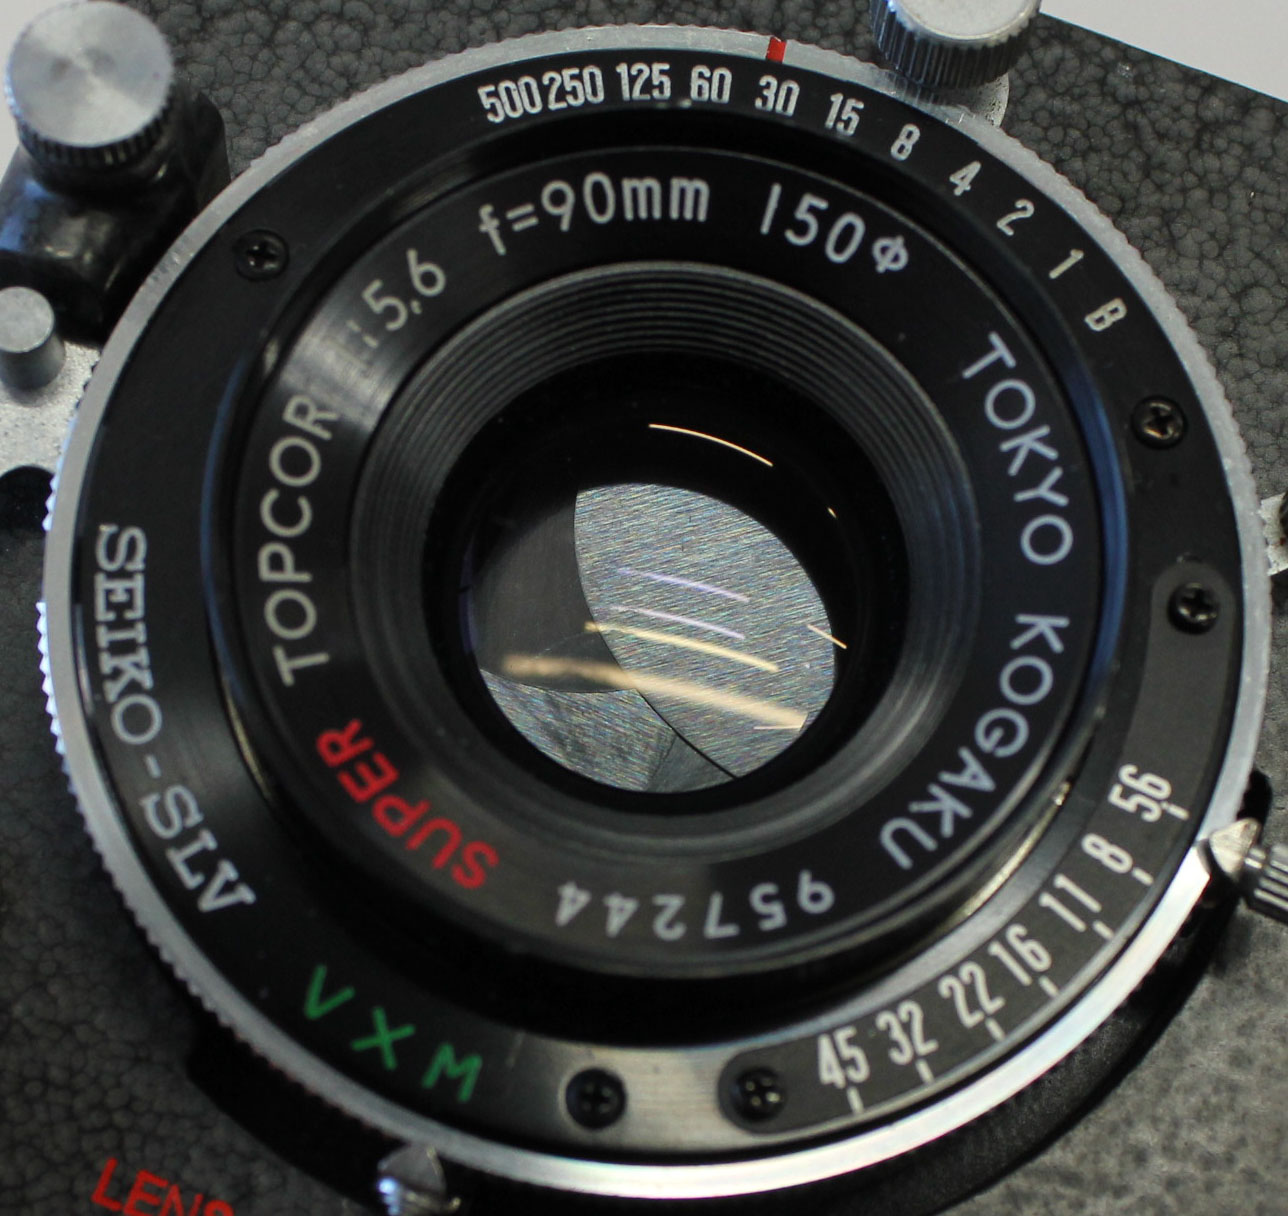  Topcon Horseman 985 Camera with Super Topcor 90mm F/5.6 lens from Japan Photo 16